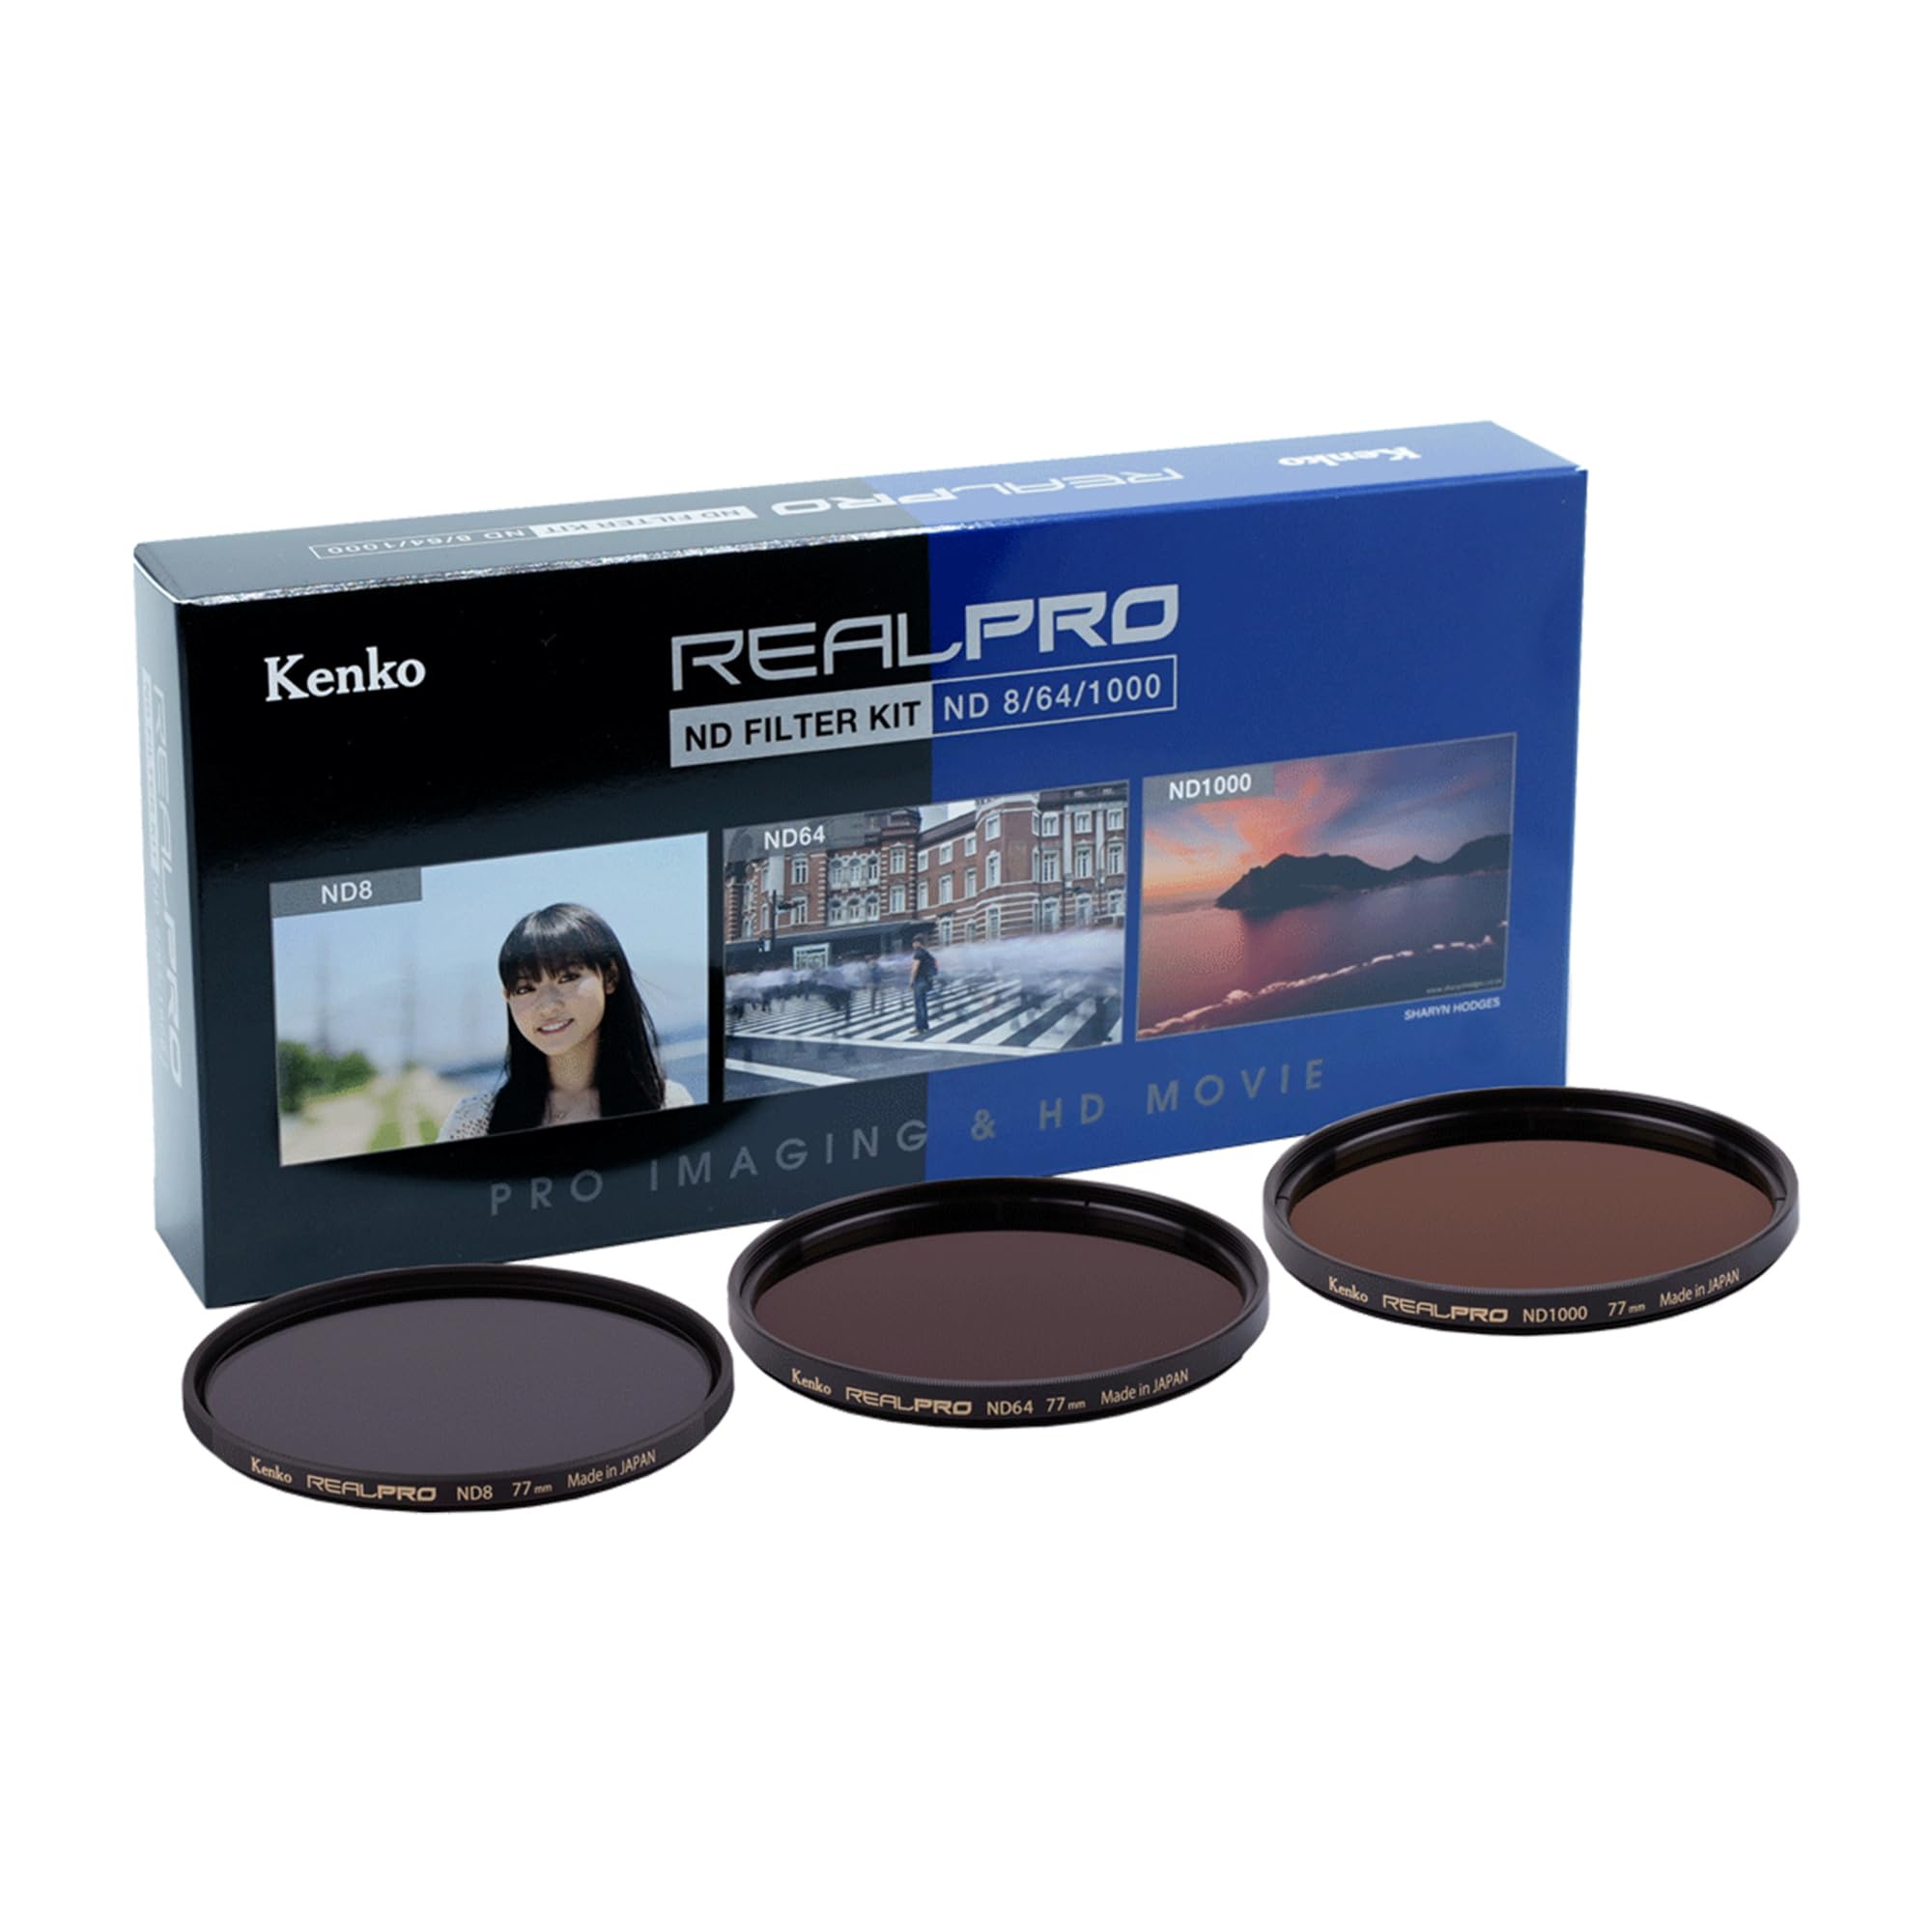 Kenko Filtersatz REALPRO ND Filter Kit ø82mm, ND8/64/1000, Inklusive Aufbewahrungskoffer